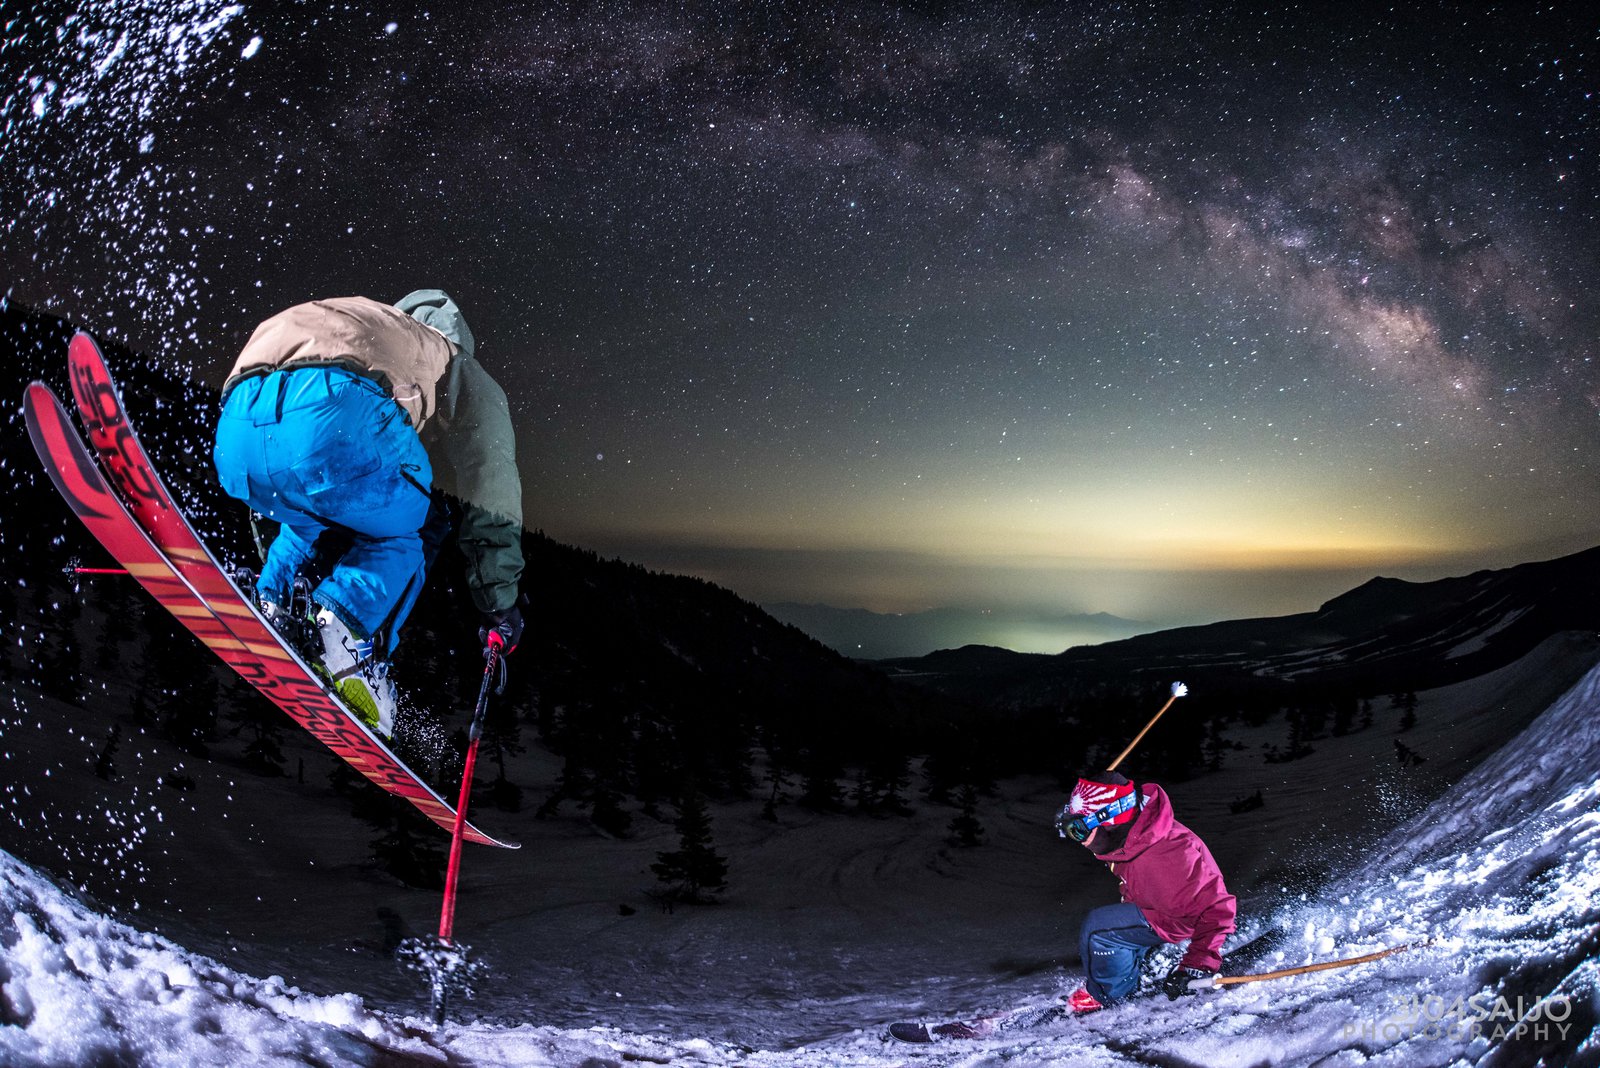 Skiing under the Milky Way